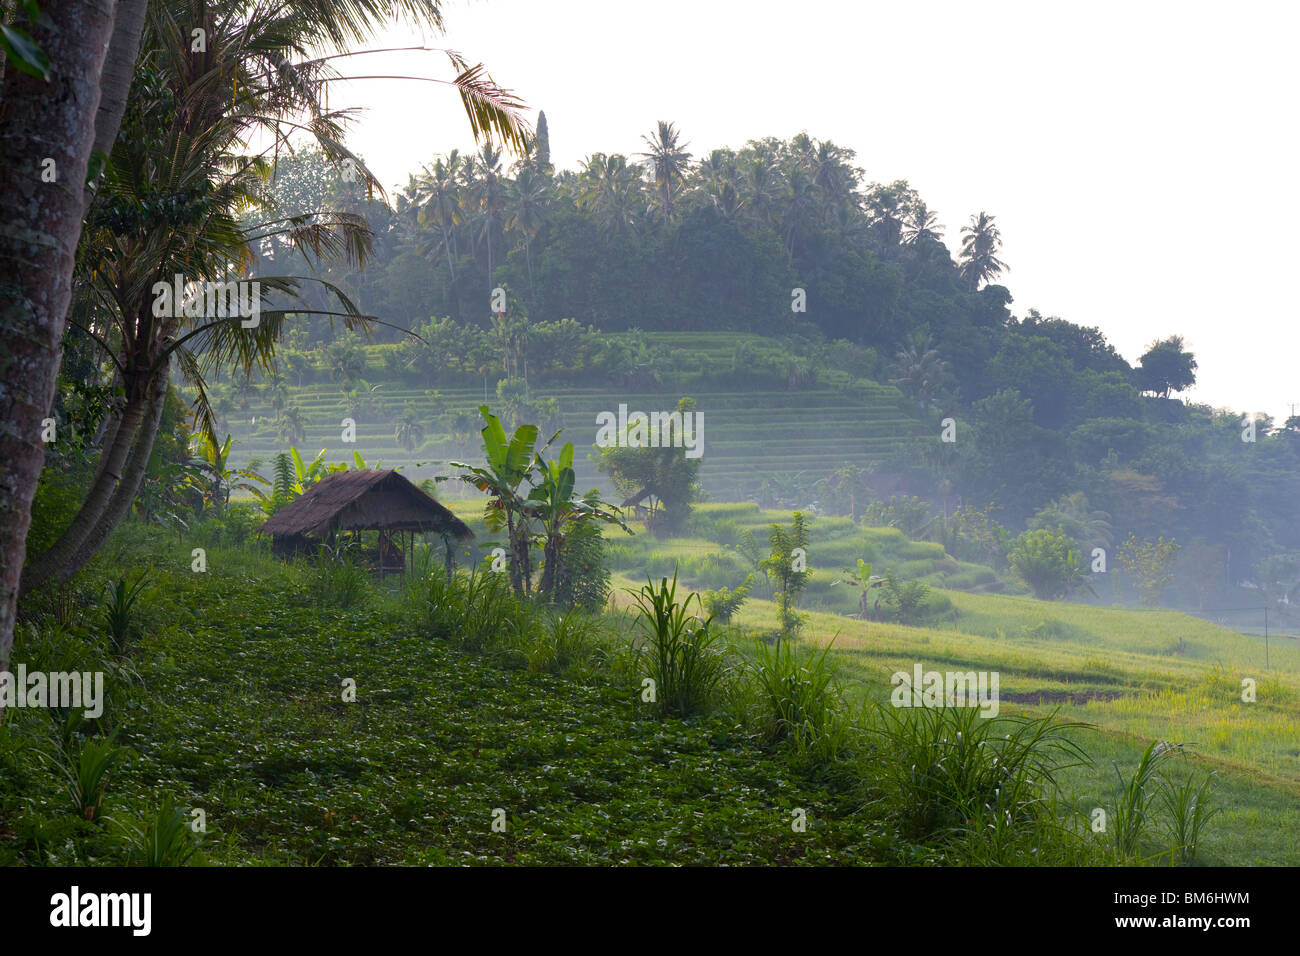 Rice field at Tirta gangga, Bali Indonesia Stock Photo